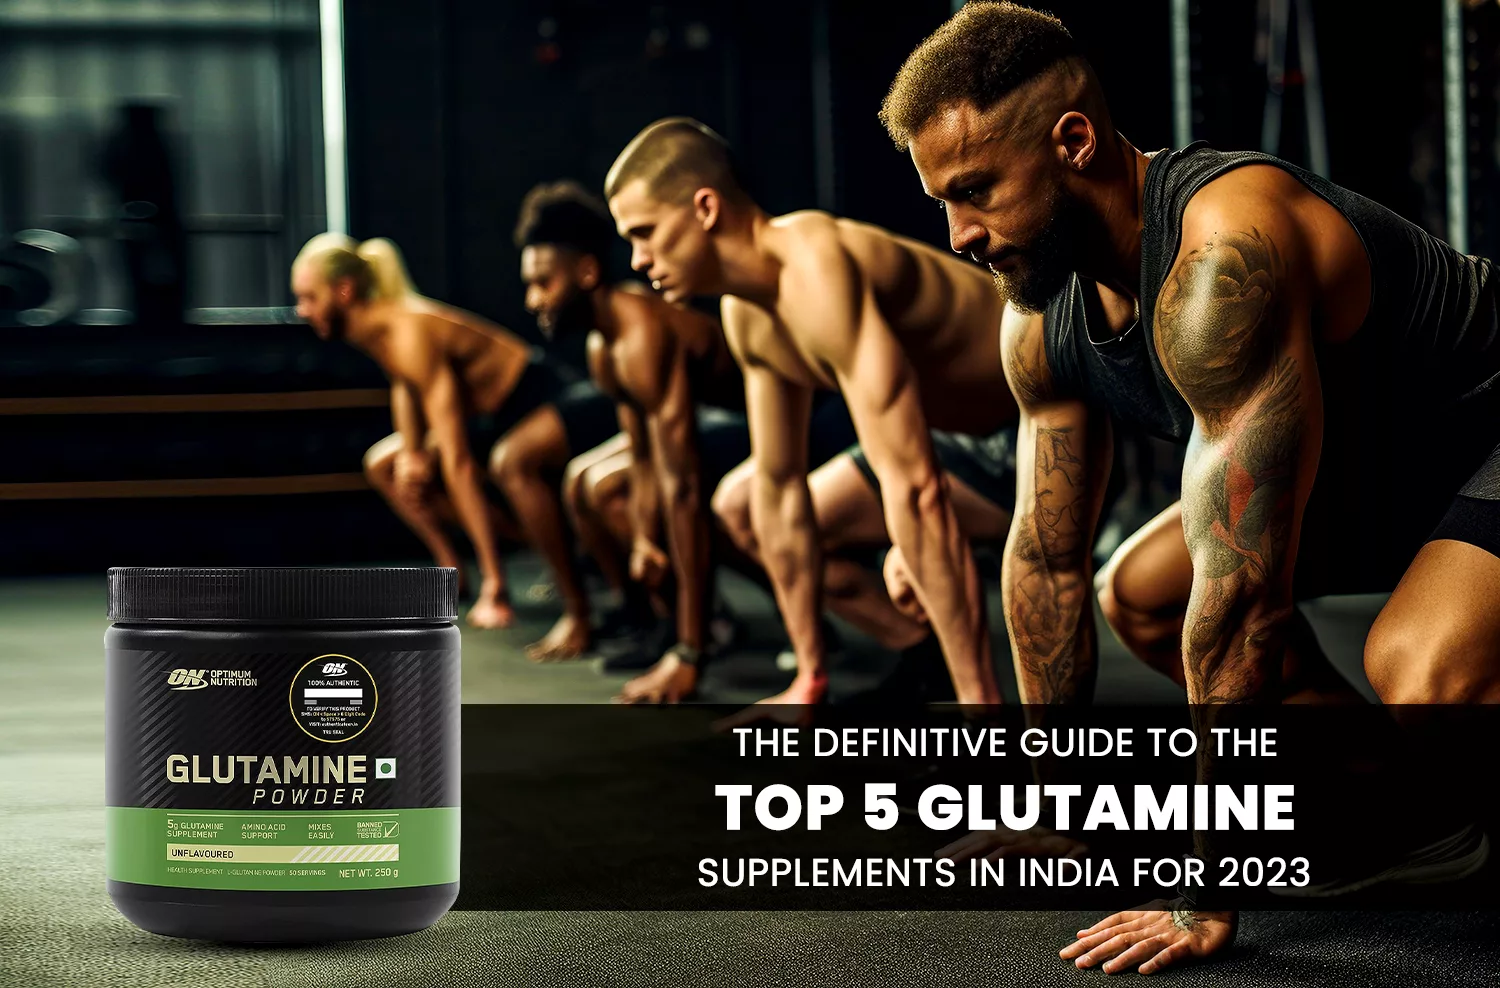 Best Glutamine Supplements in India for 2023